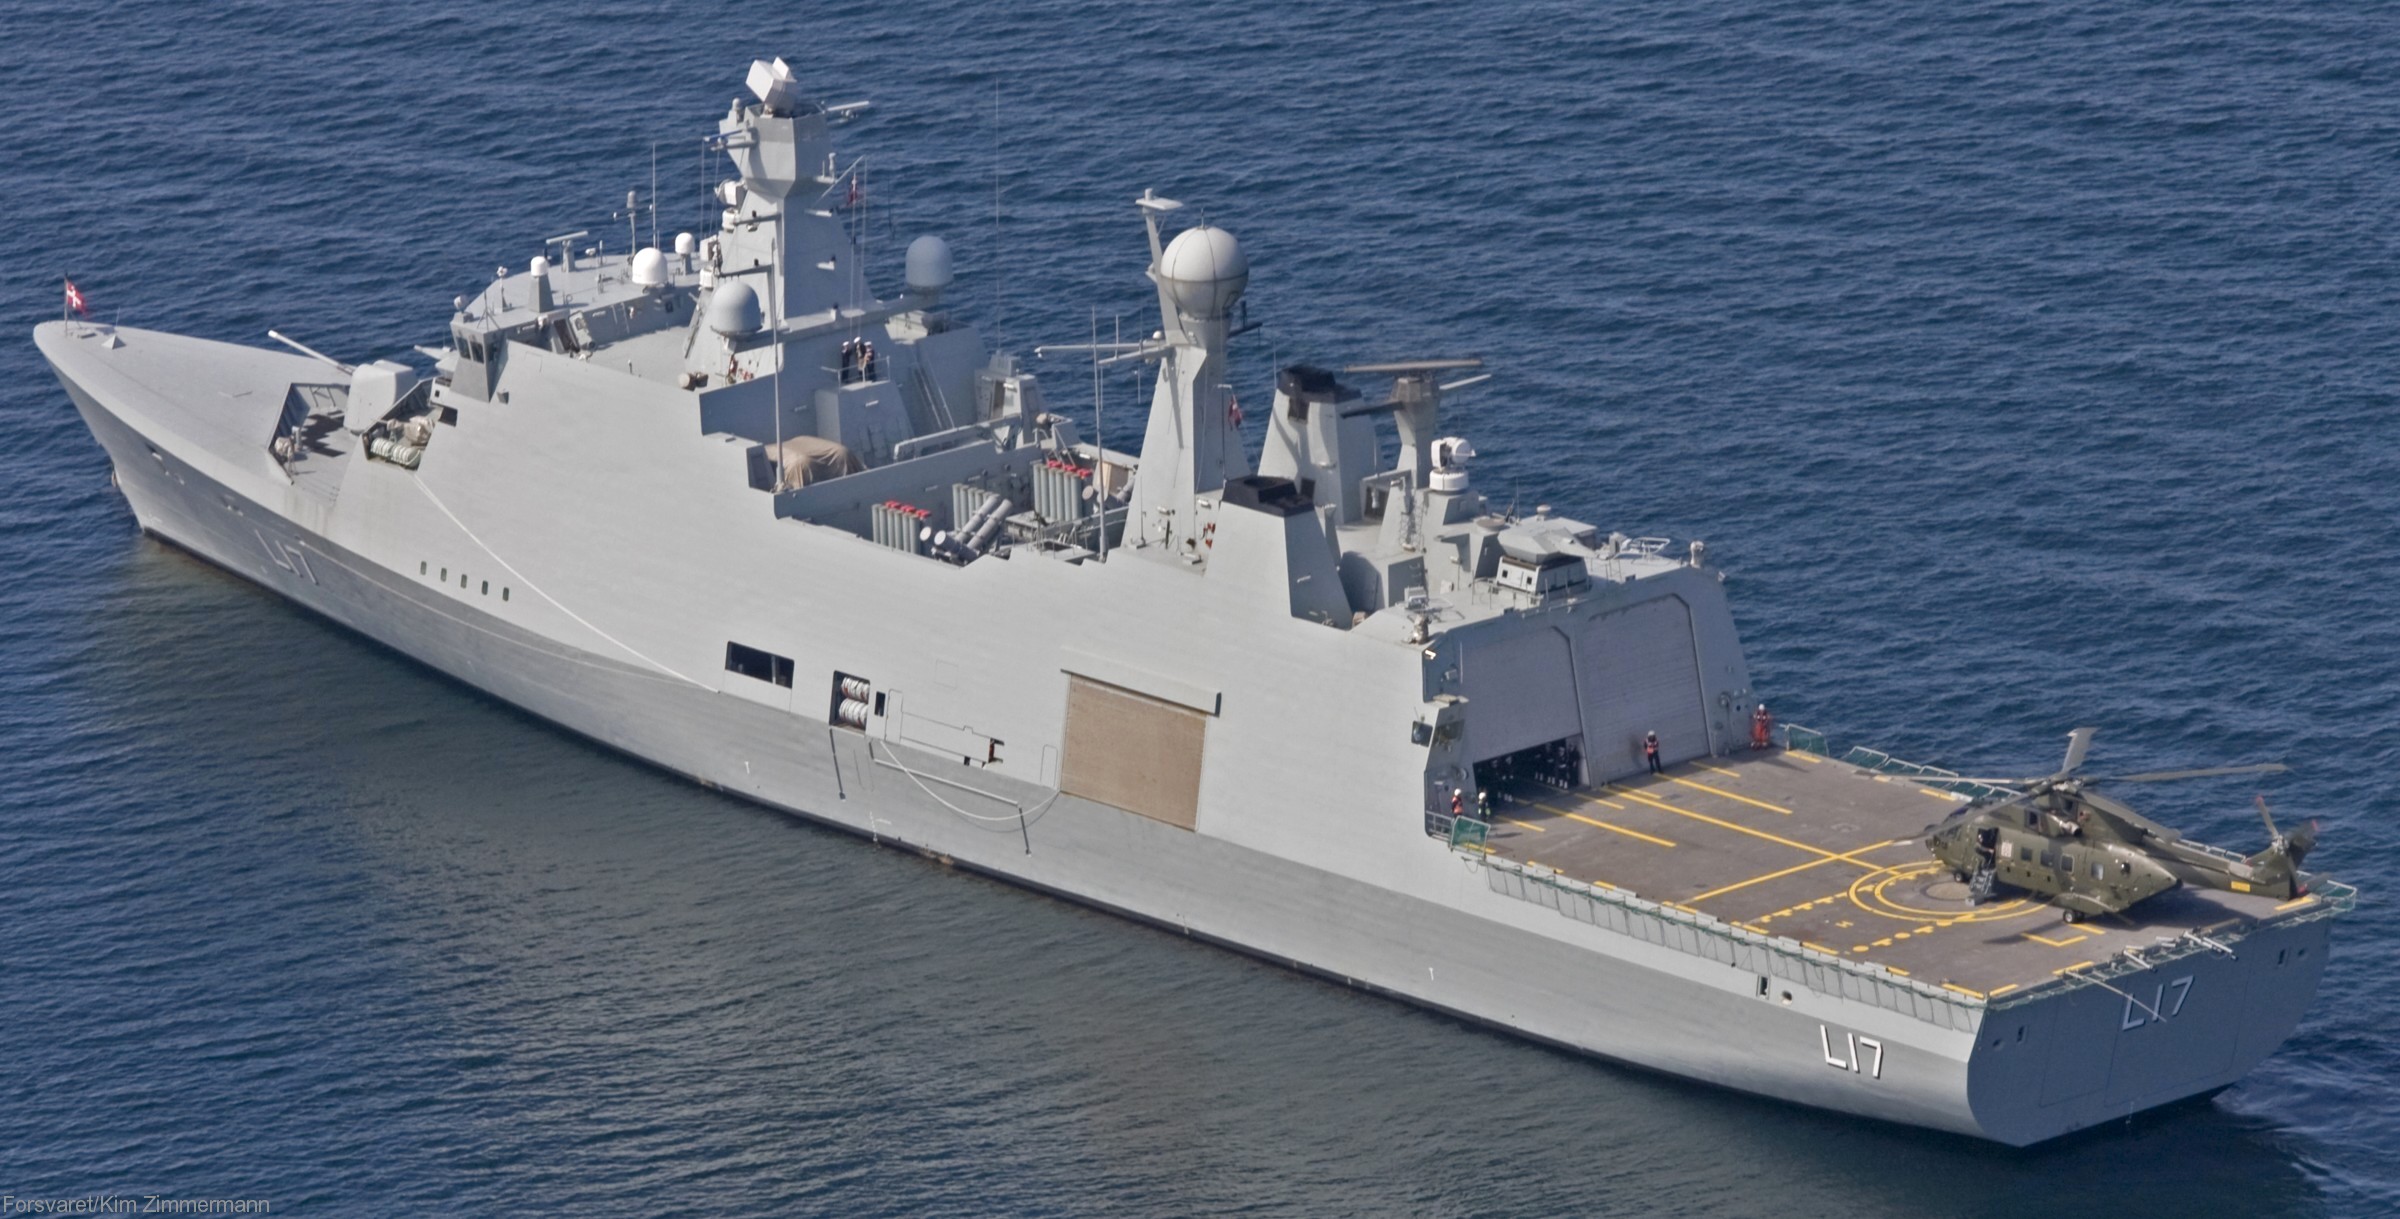 f-342 hdms esbern snare l-17 frigate command support ship royal danish navy 57